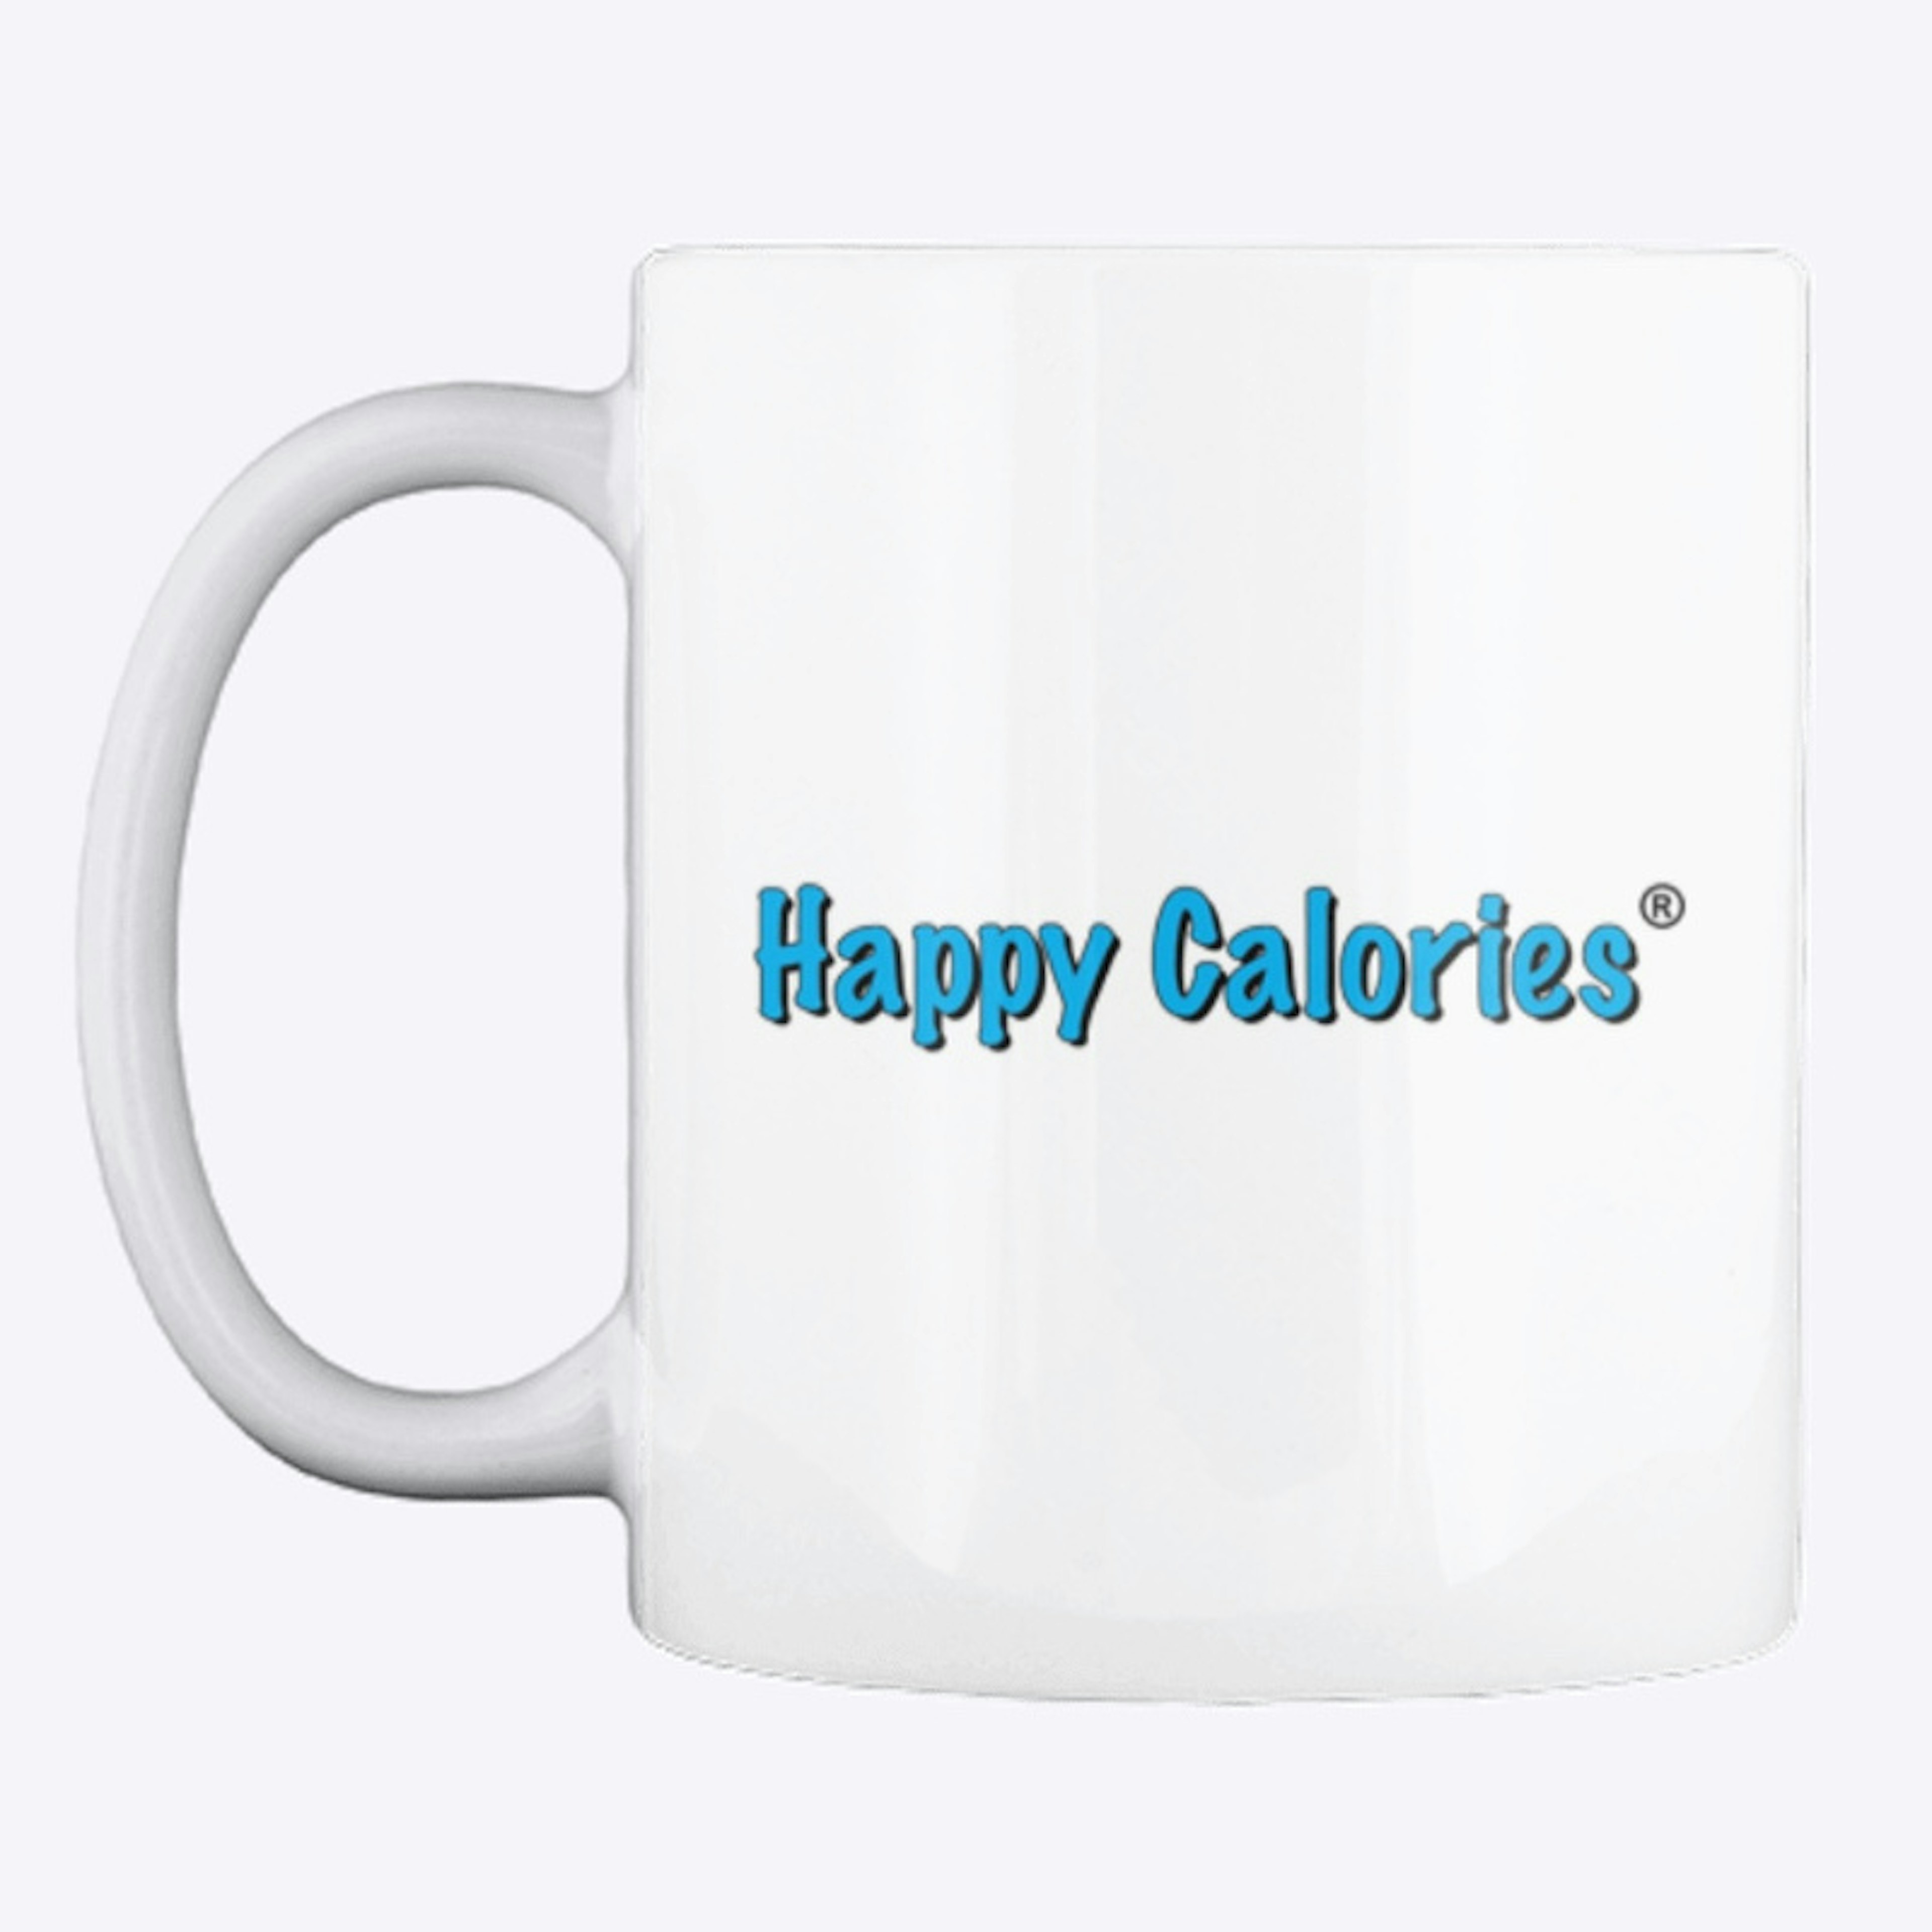 Happy Calories Mug